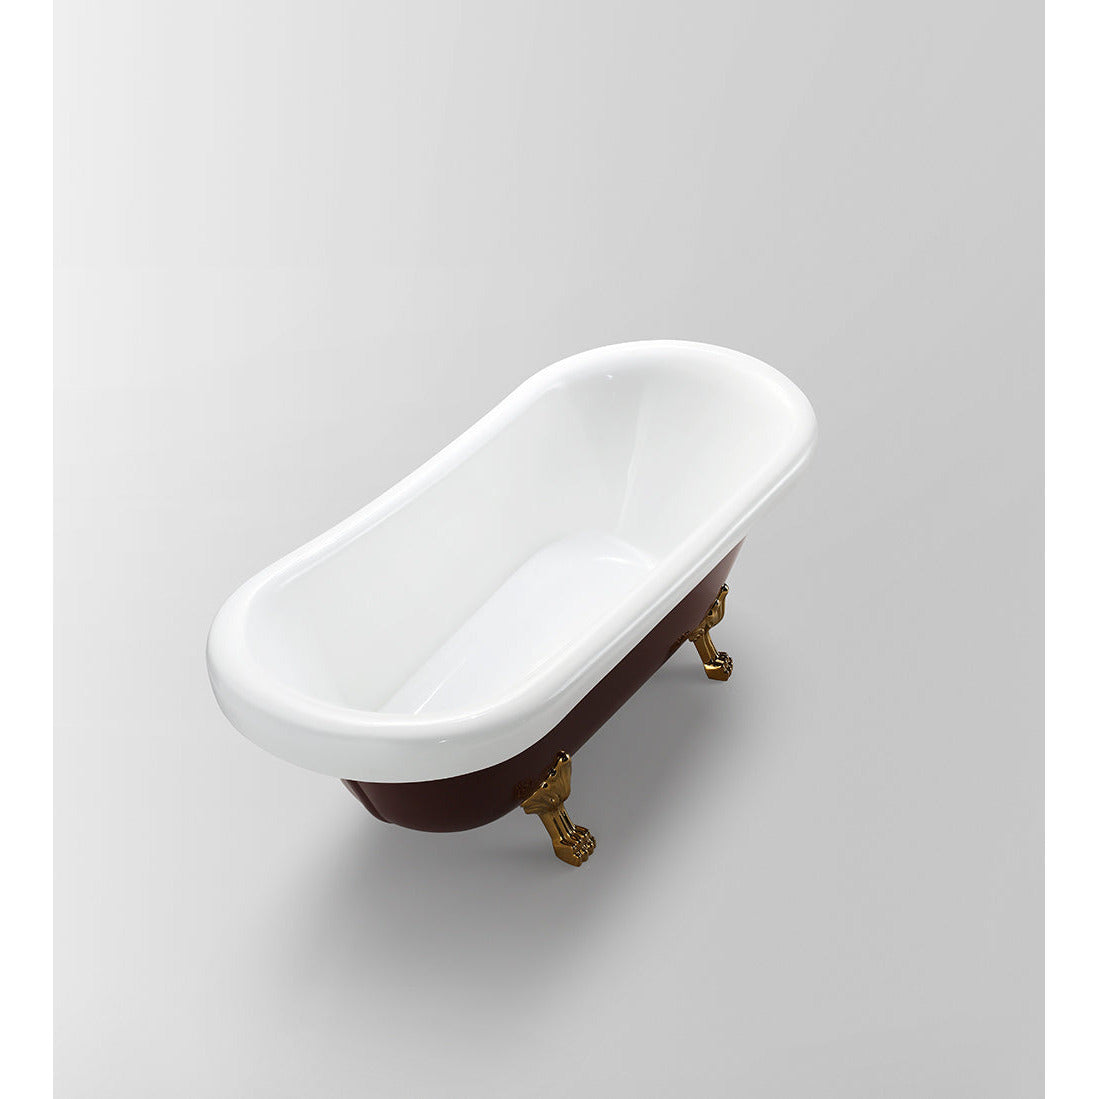 Vanity Art 67" Freestanding Bathtub – Drain W/Chrome Finish and Adjustable Leveling Legs. - VA6311-RL